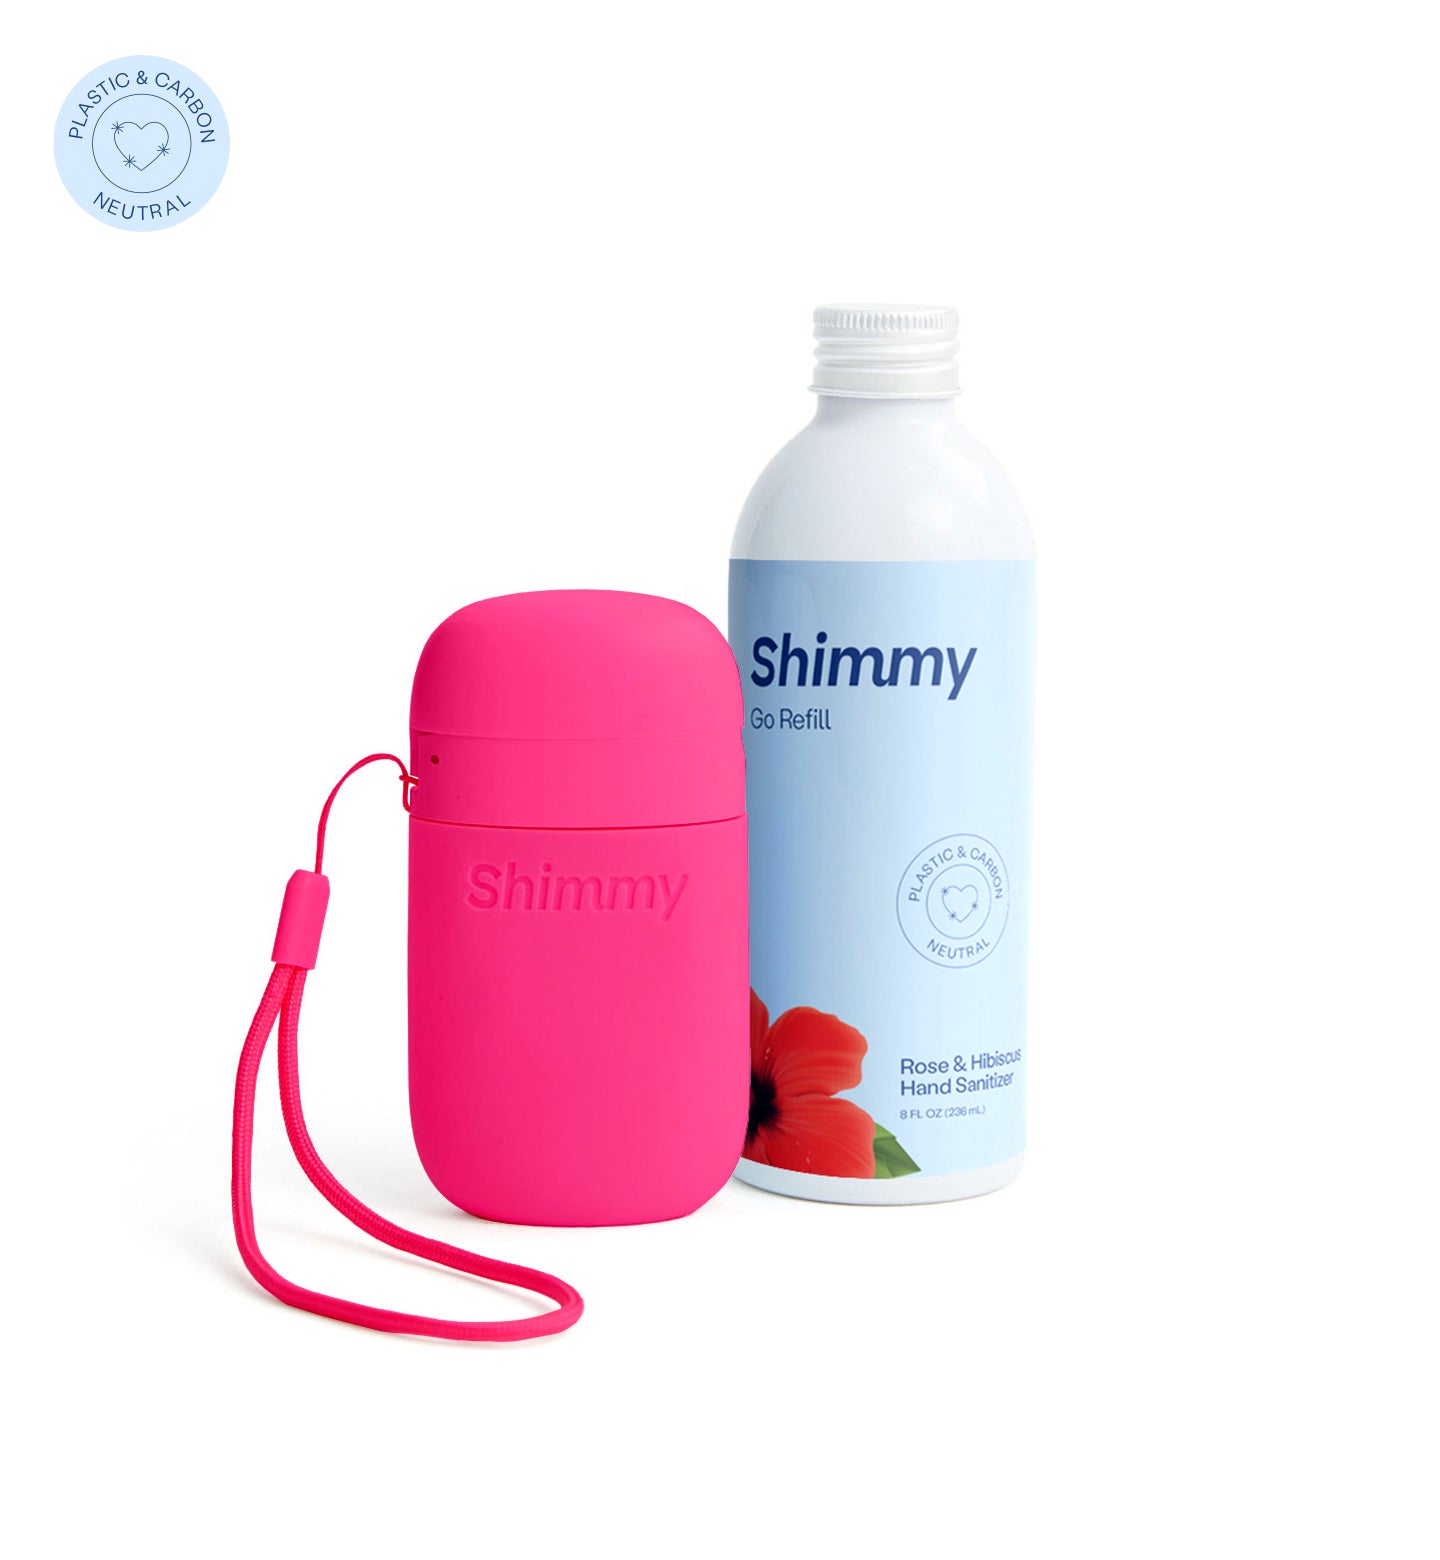 Shimmy Go Portable Hand Sanitizer Dispenser Magenta + Rose & Hibiscus Hand Sanitizer [41490453823679] - 41490453823679